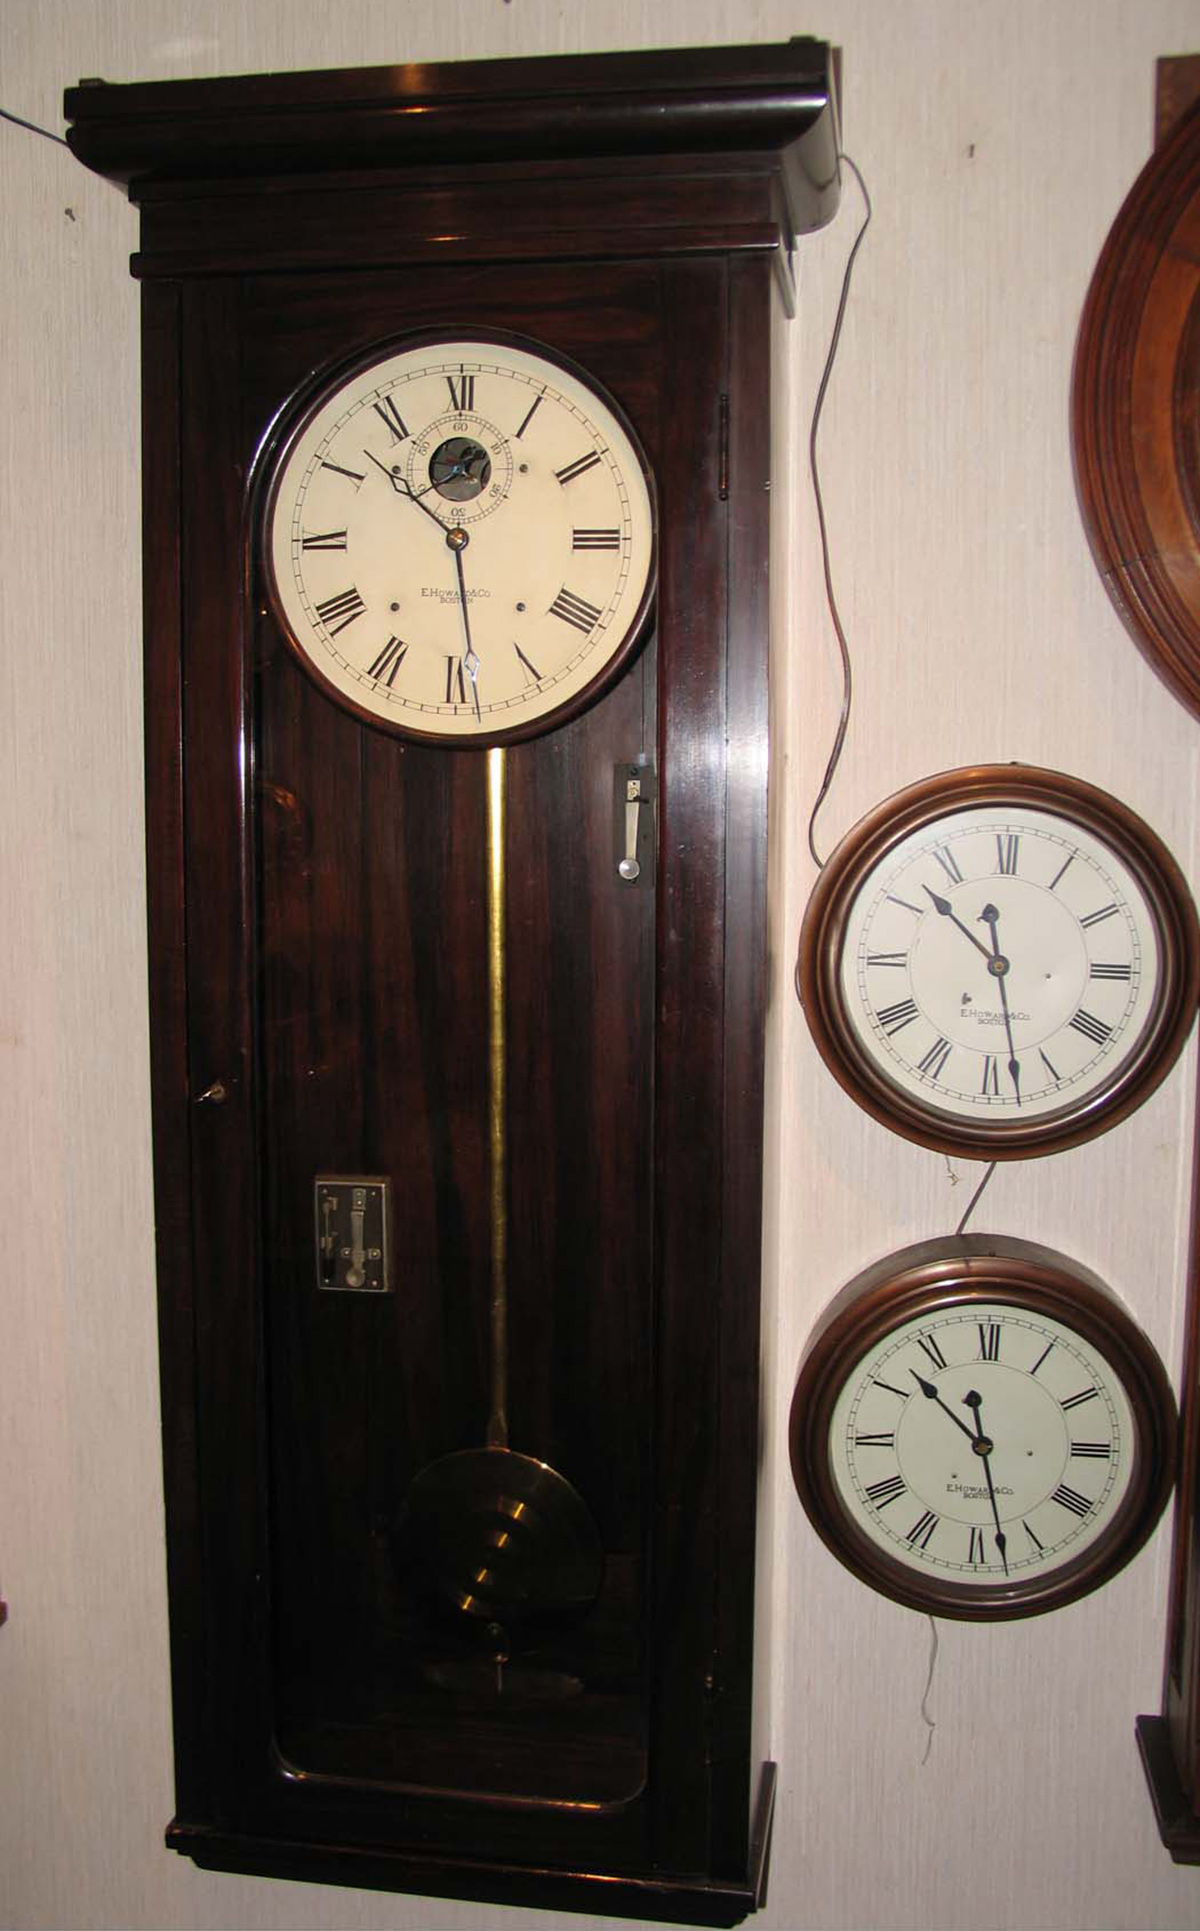 E. Howard No. 89 Master Clock and Slaves